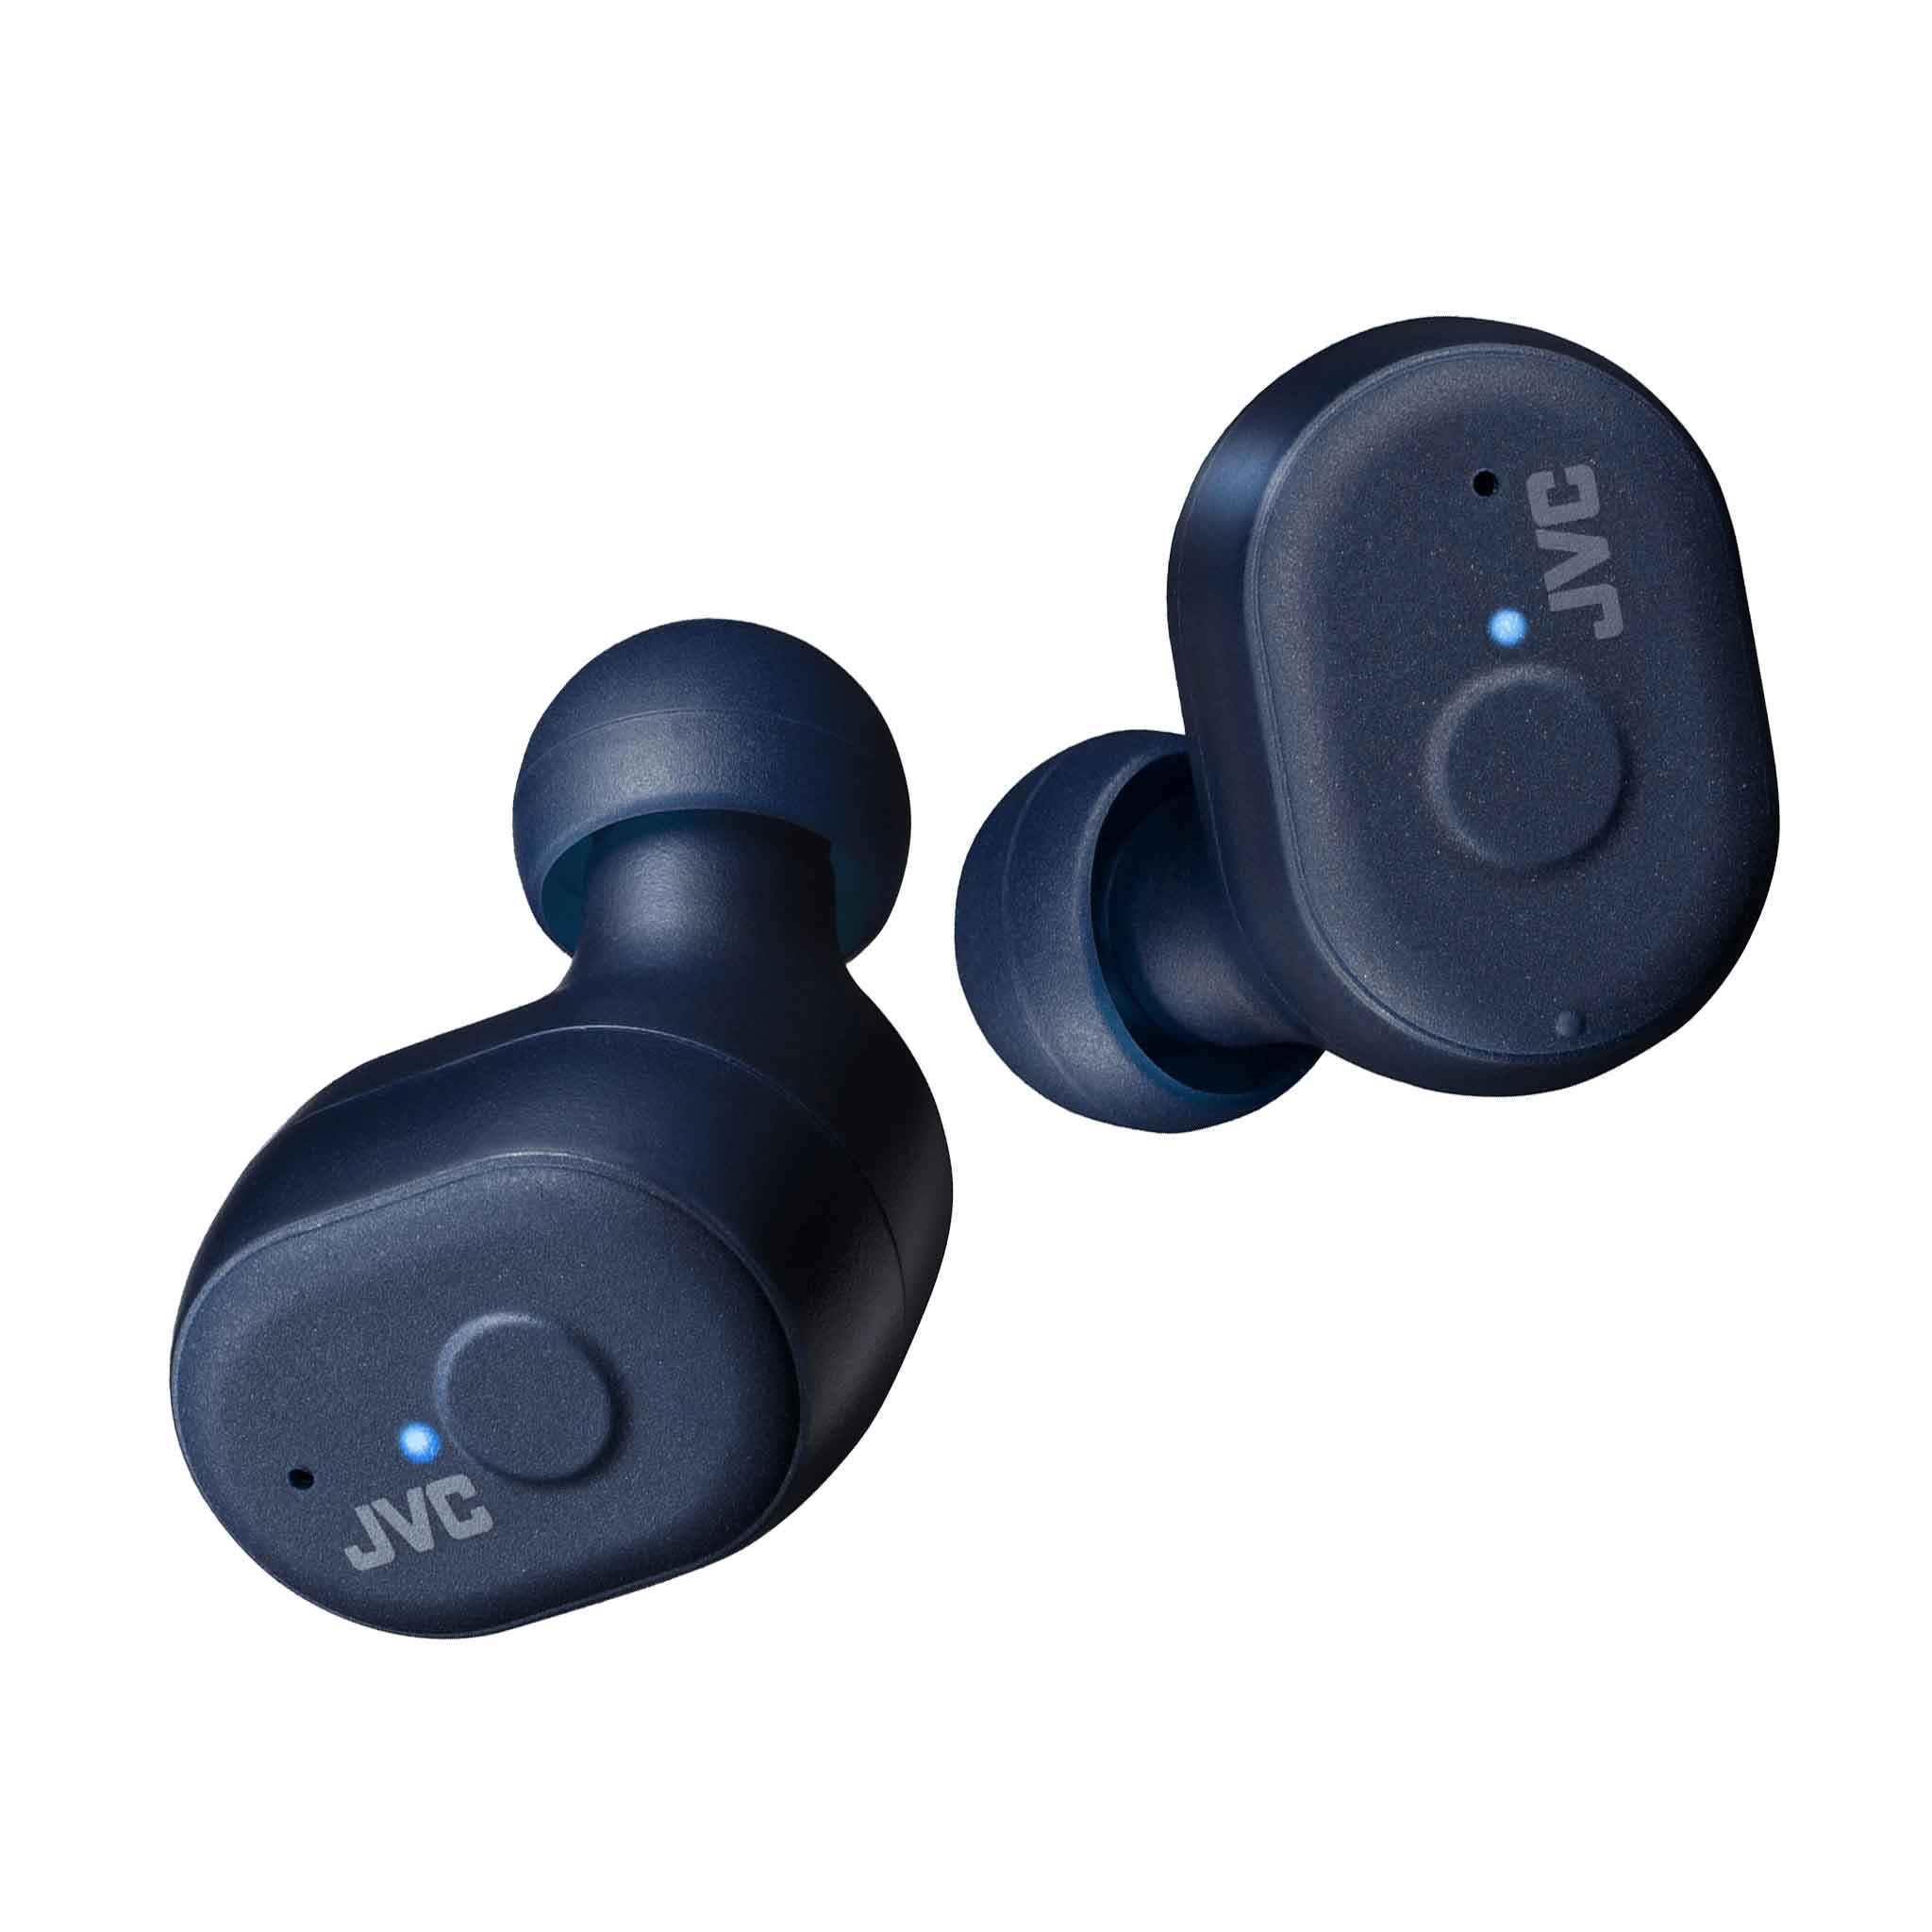 HA-A11T-A Wireless Bluetooth Earbuds in Blue